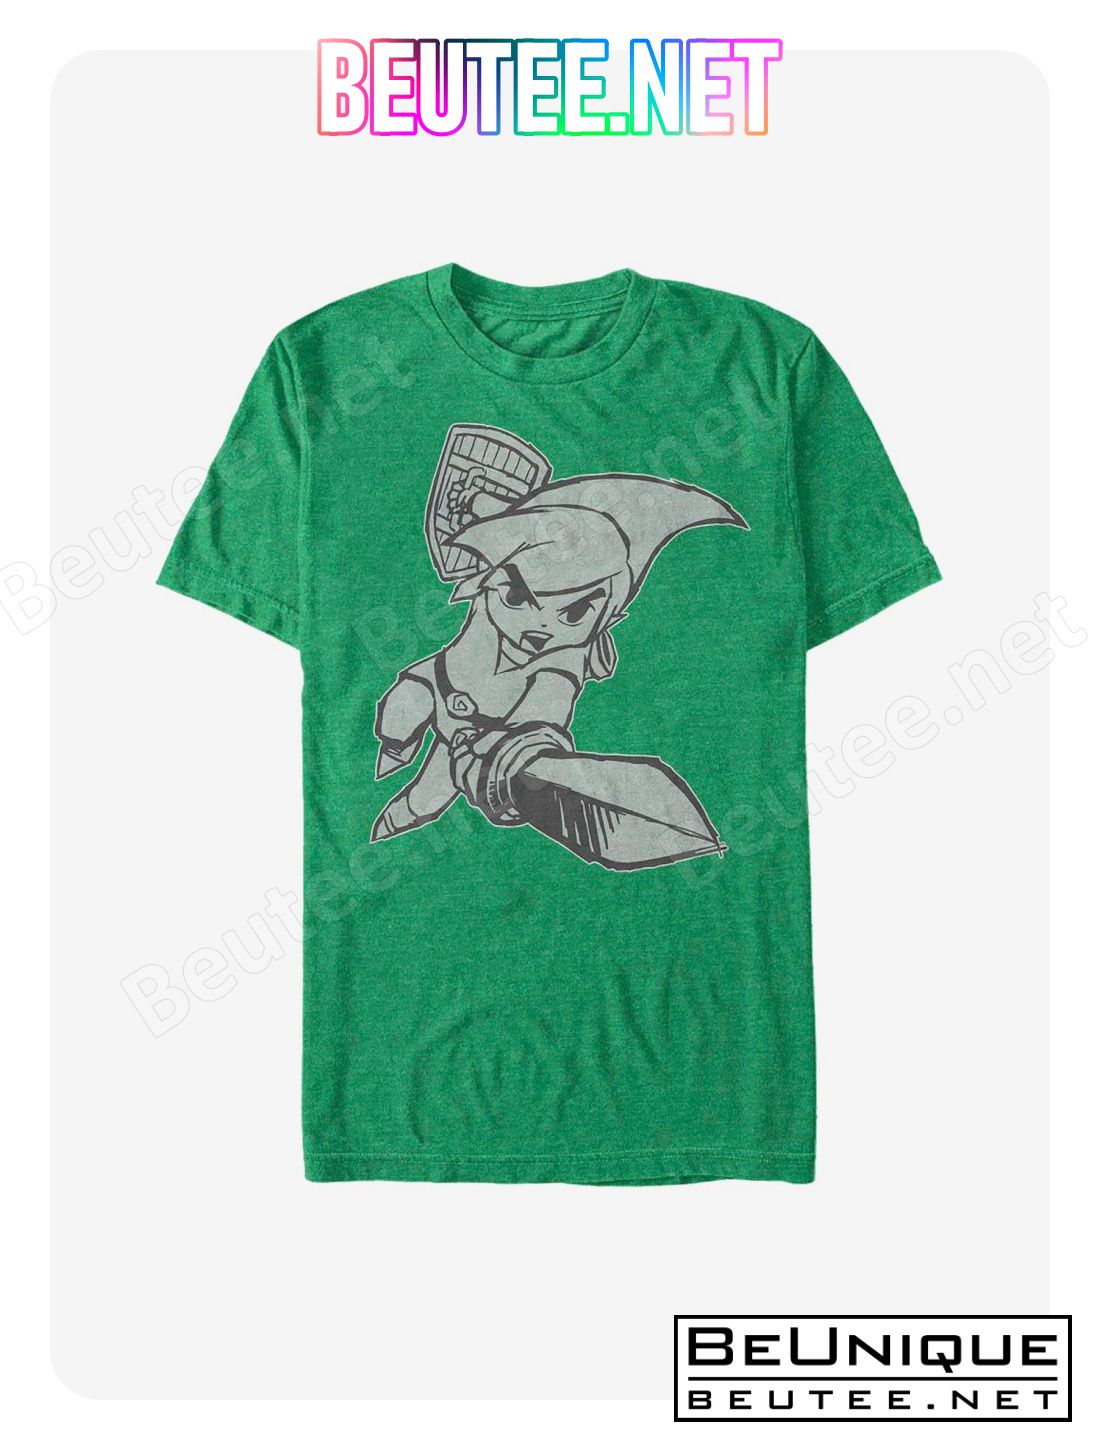 Nintendo Zelda The Wind Waker T-Shirt